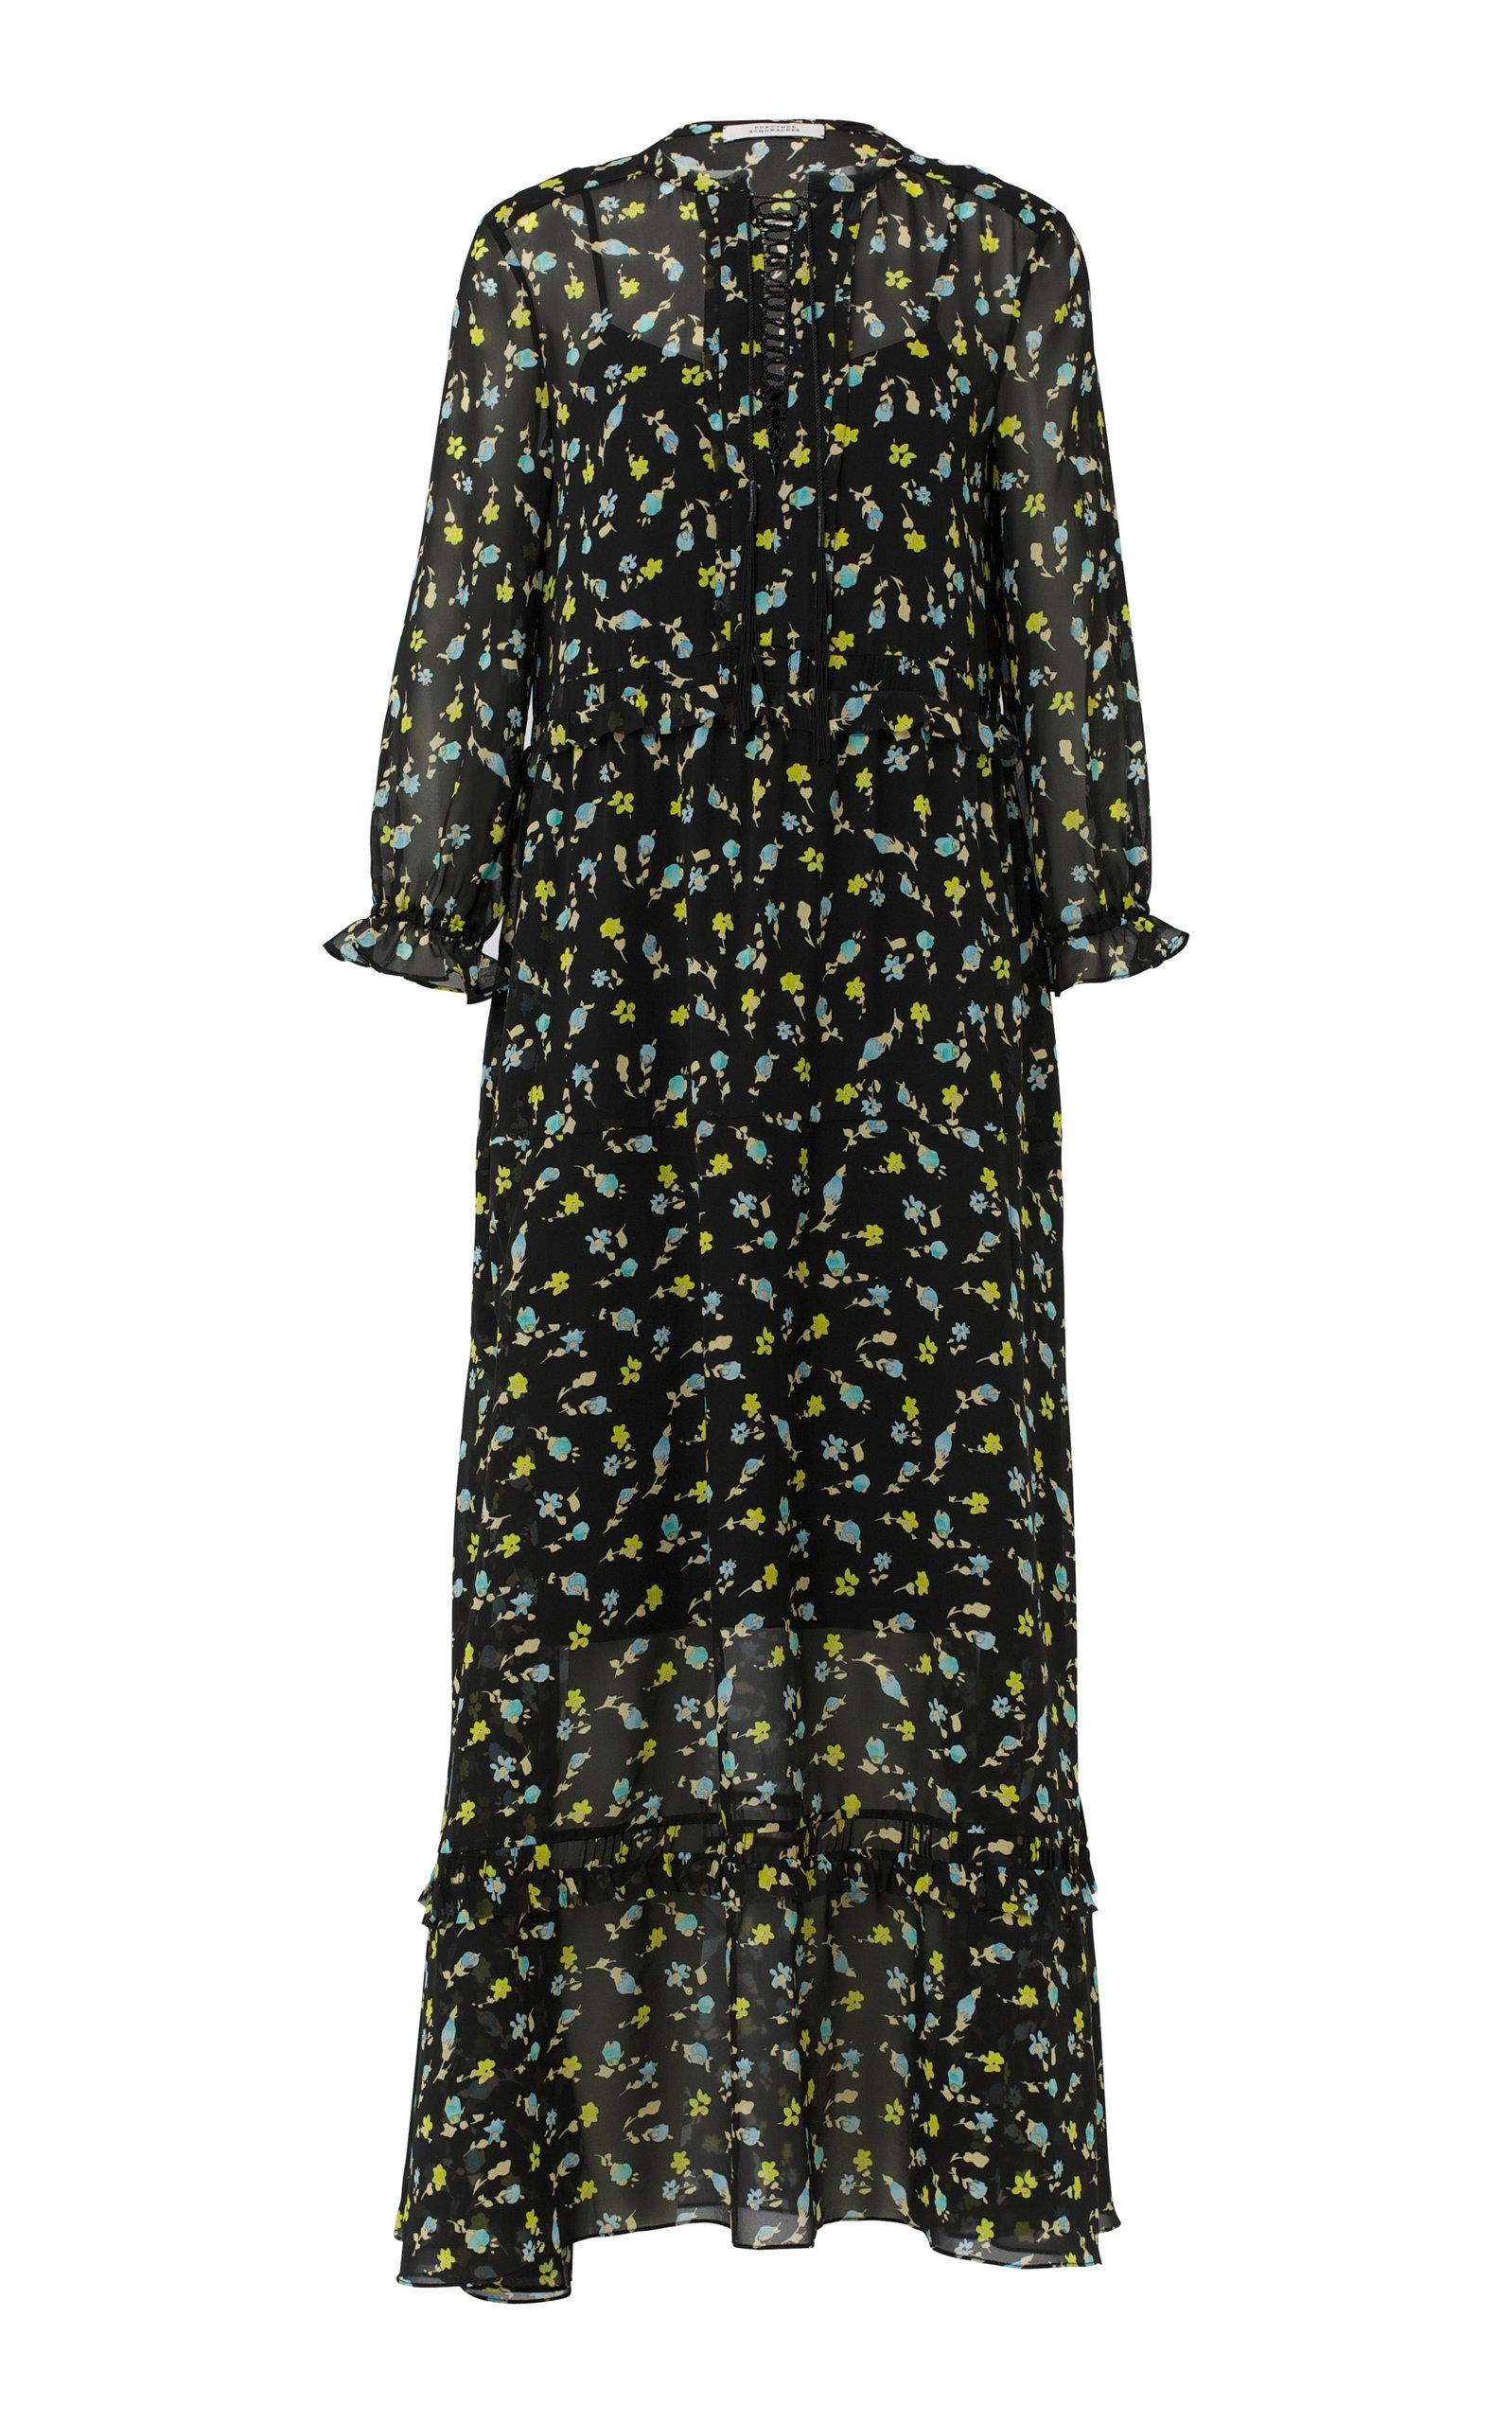 Dorothee Schumacher Silk Nightfall Meadow Dress in Floral (Black) - Lyst